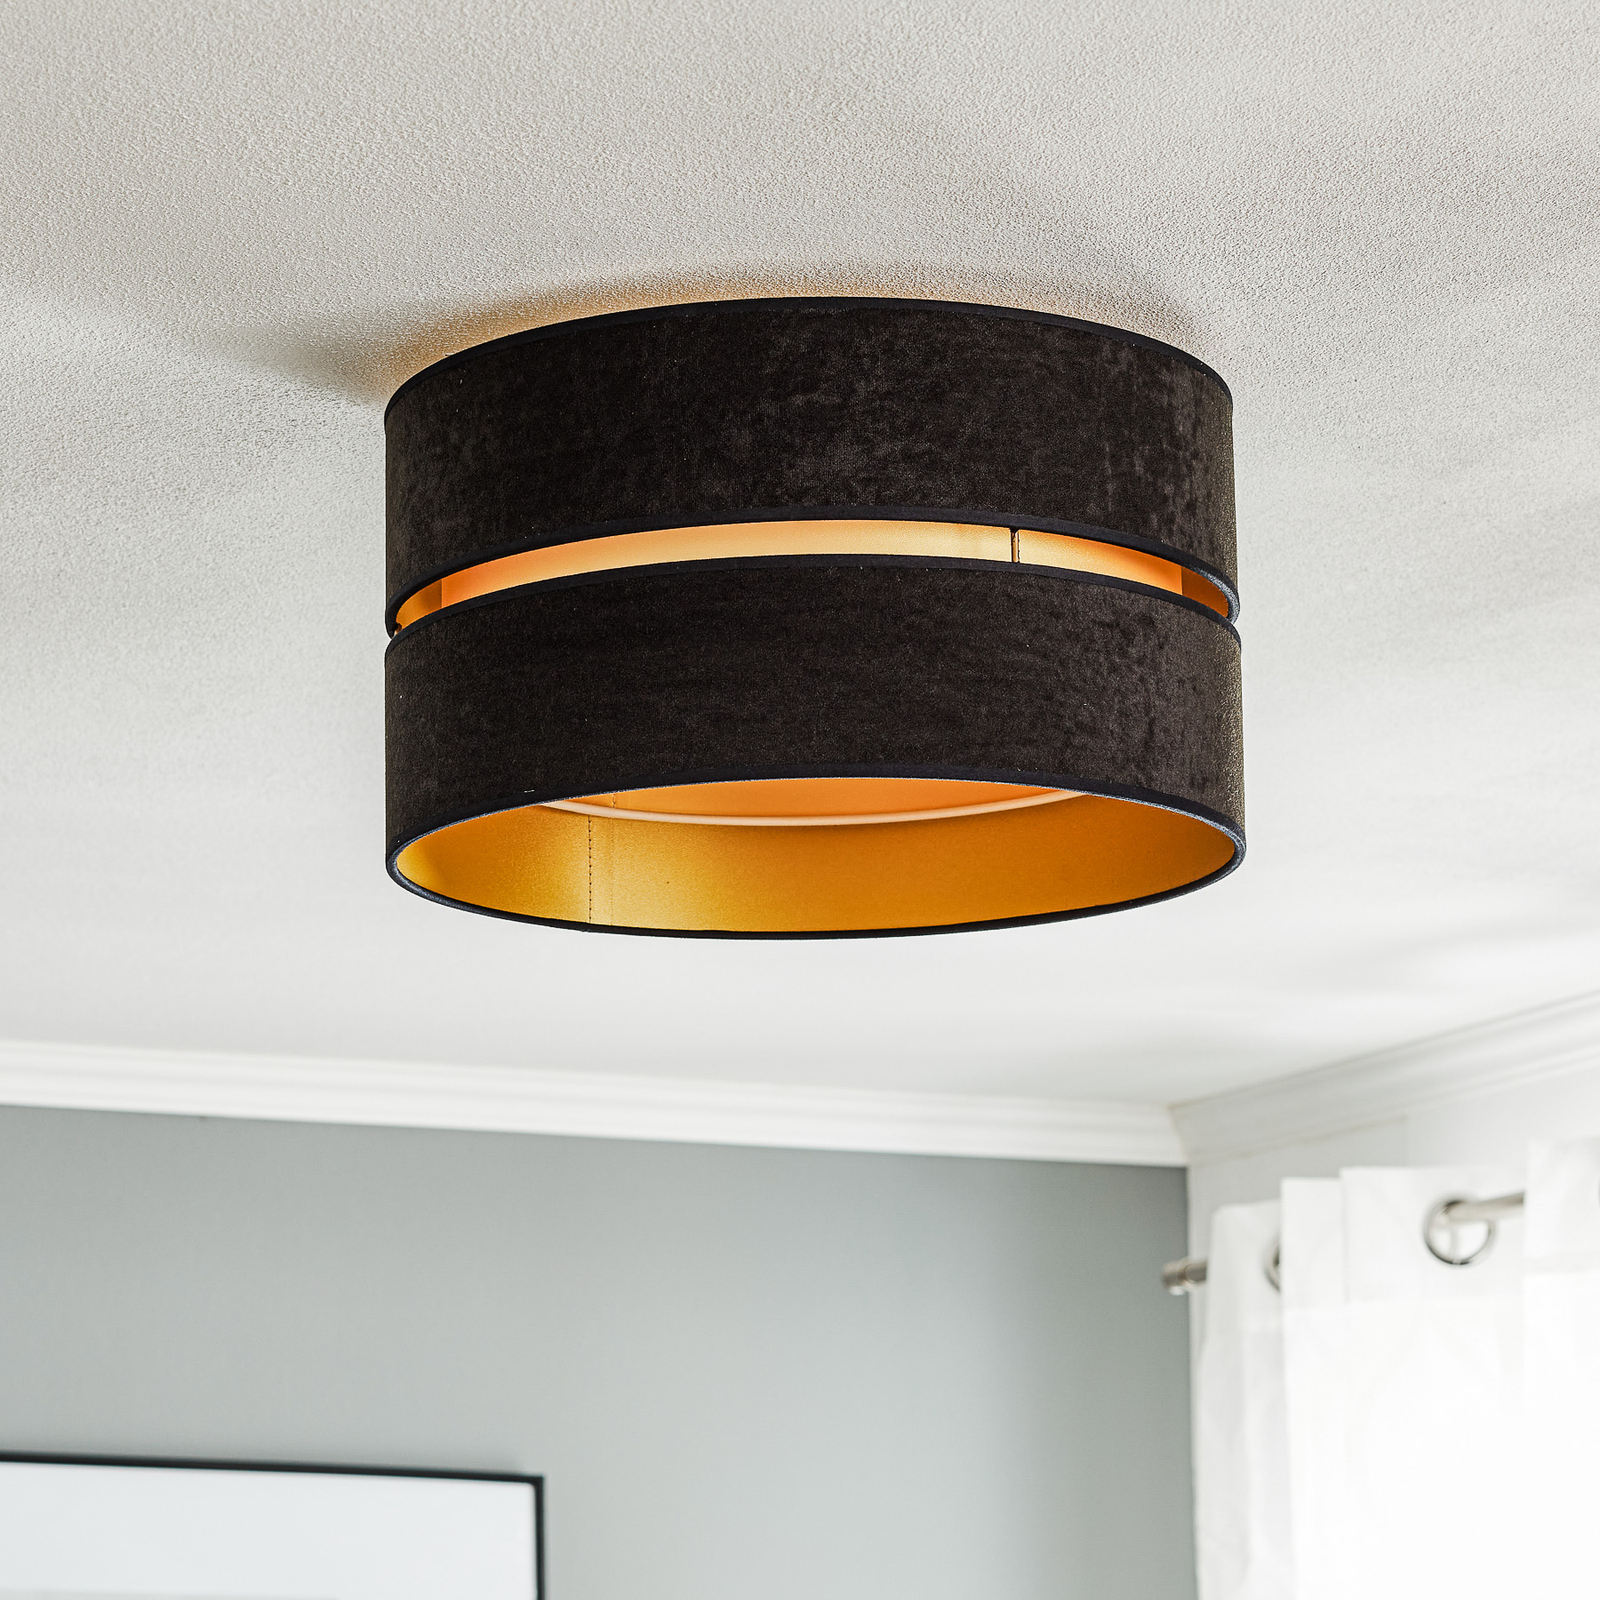 Duo ceiling light made of fabric, black/gold Ø40cm